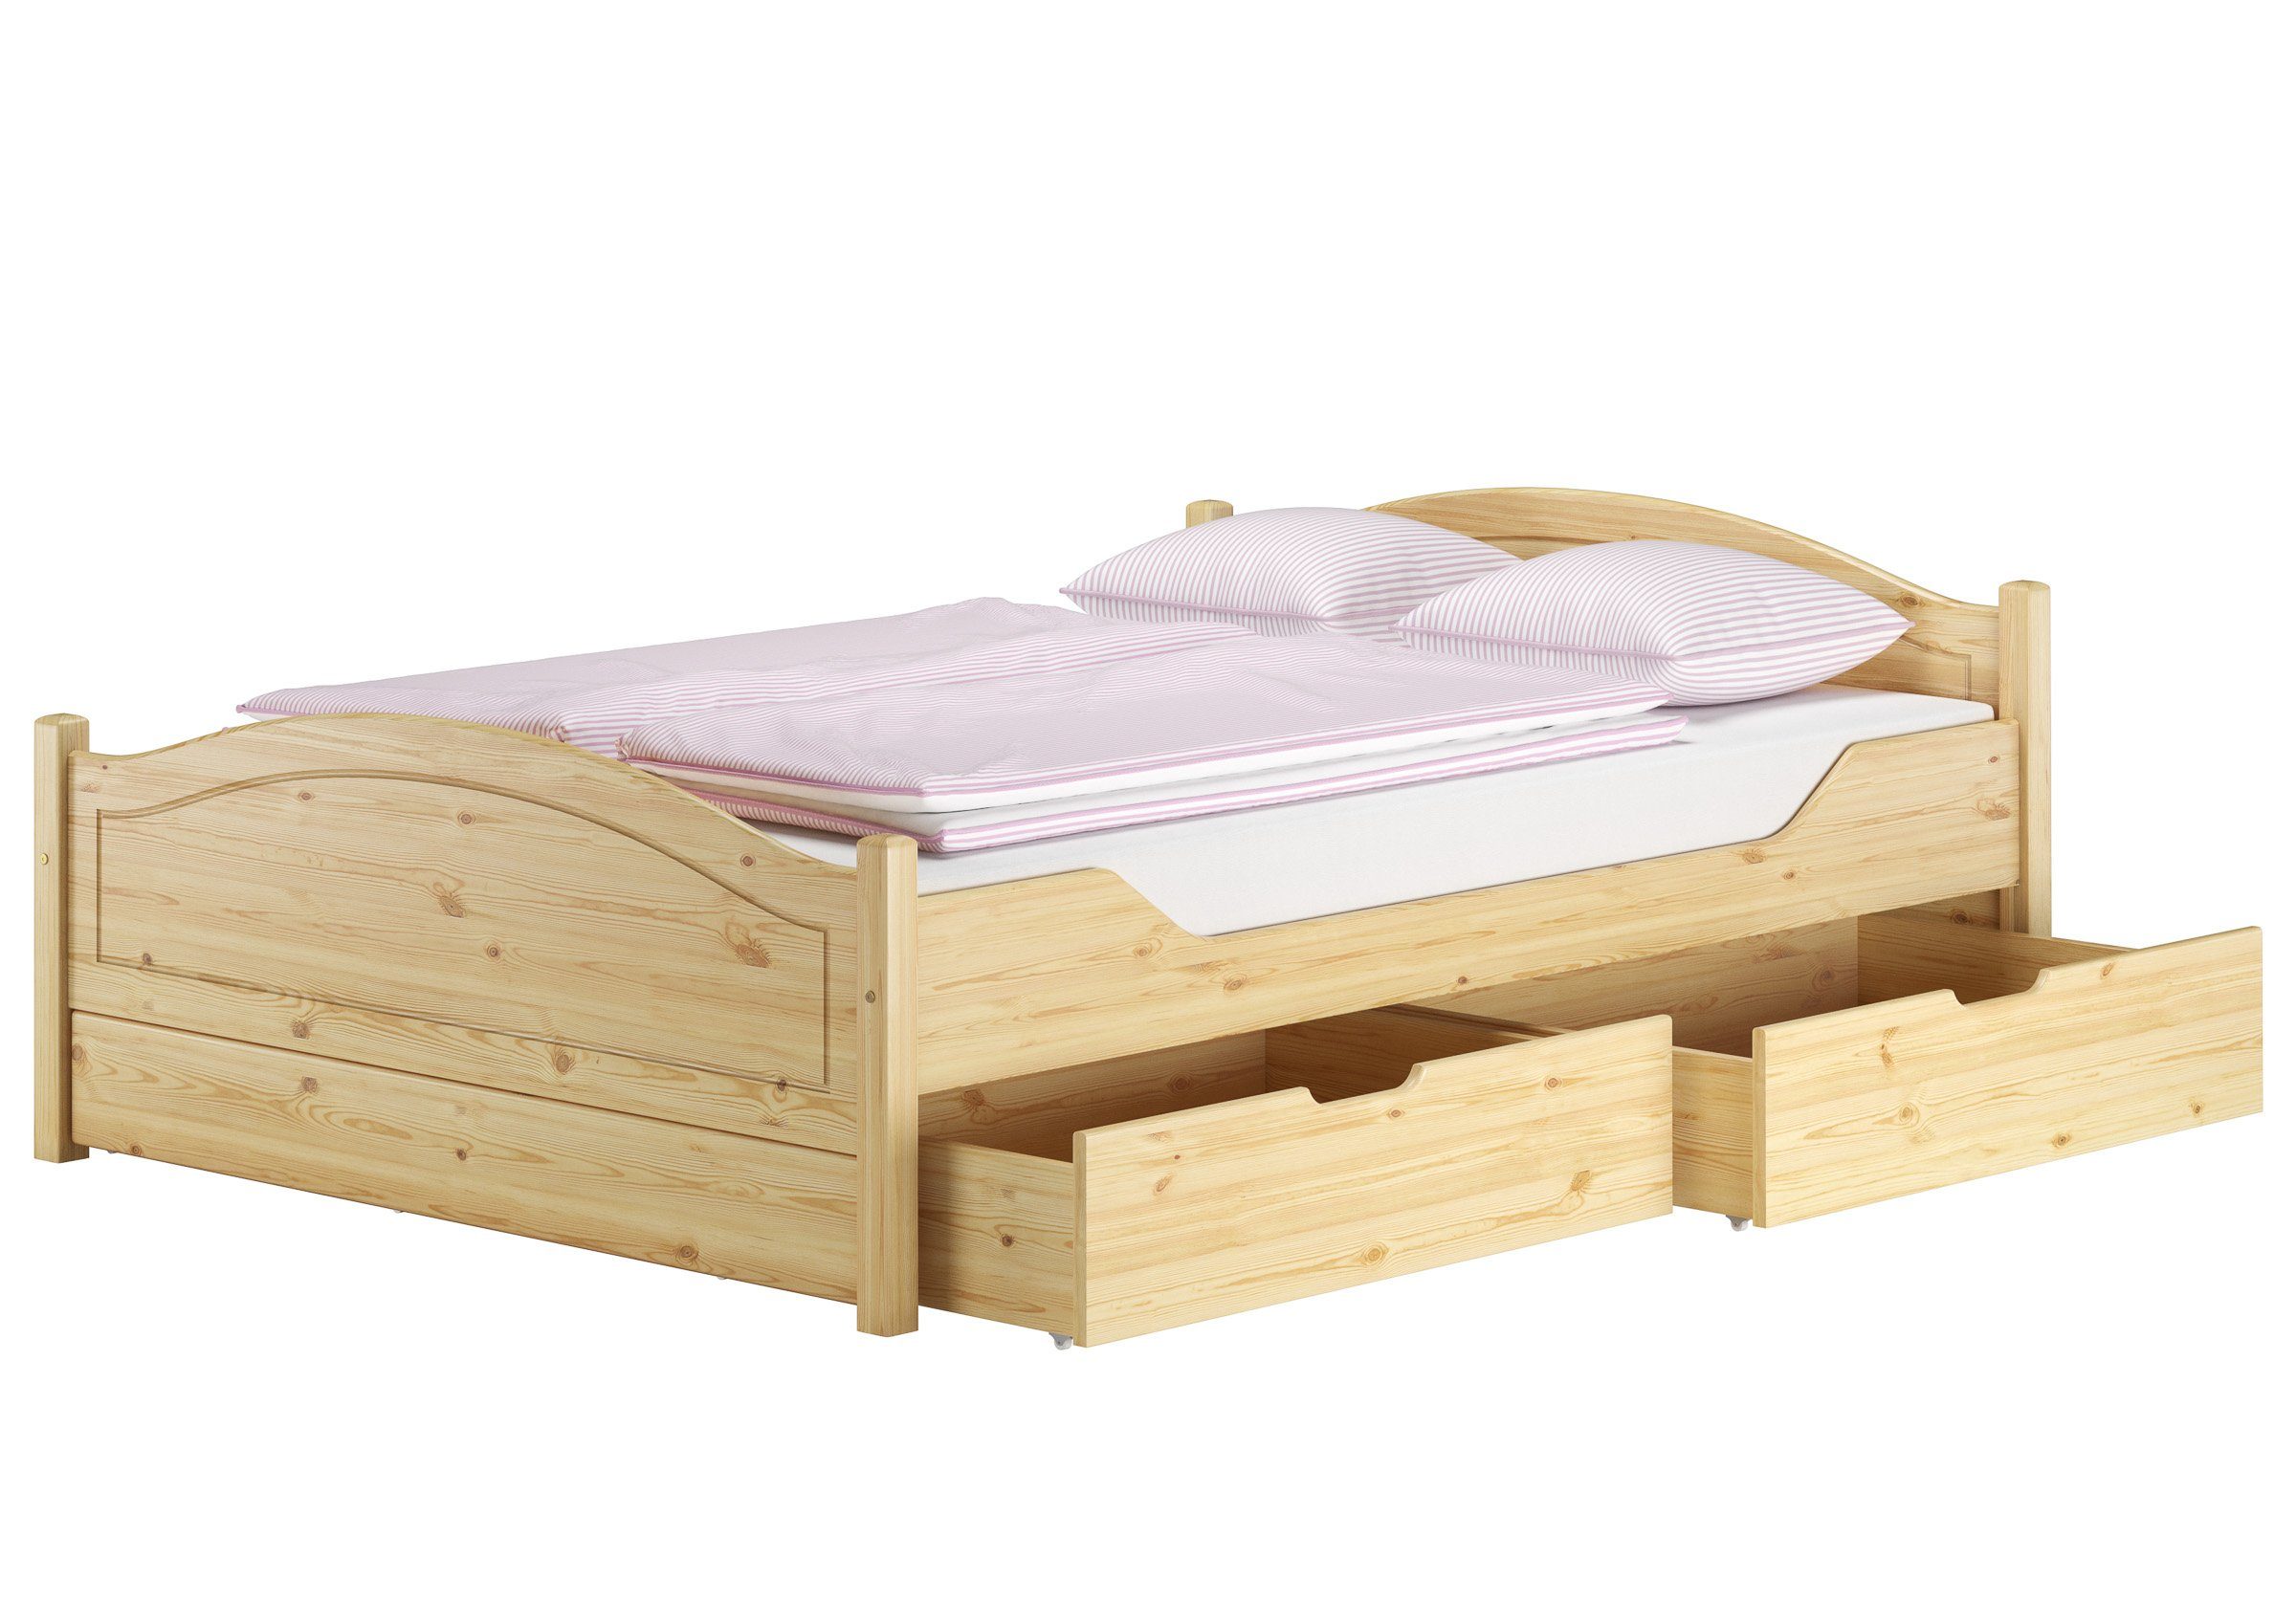 ERST-HOLZ Bett Doppelbett 140x200 Komplettset Bett mit Staukasten, Kieferfarblos lackiert